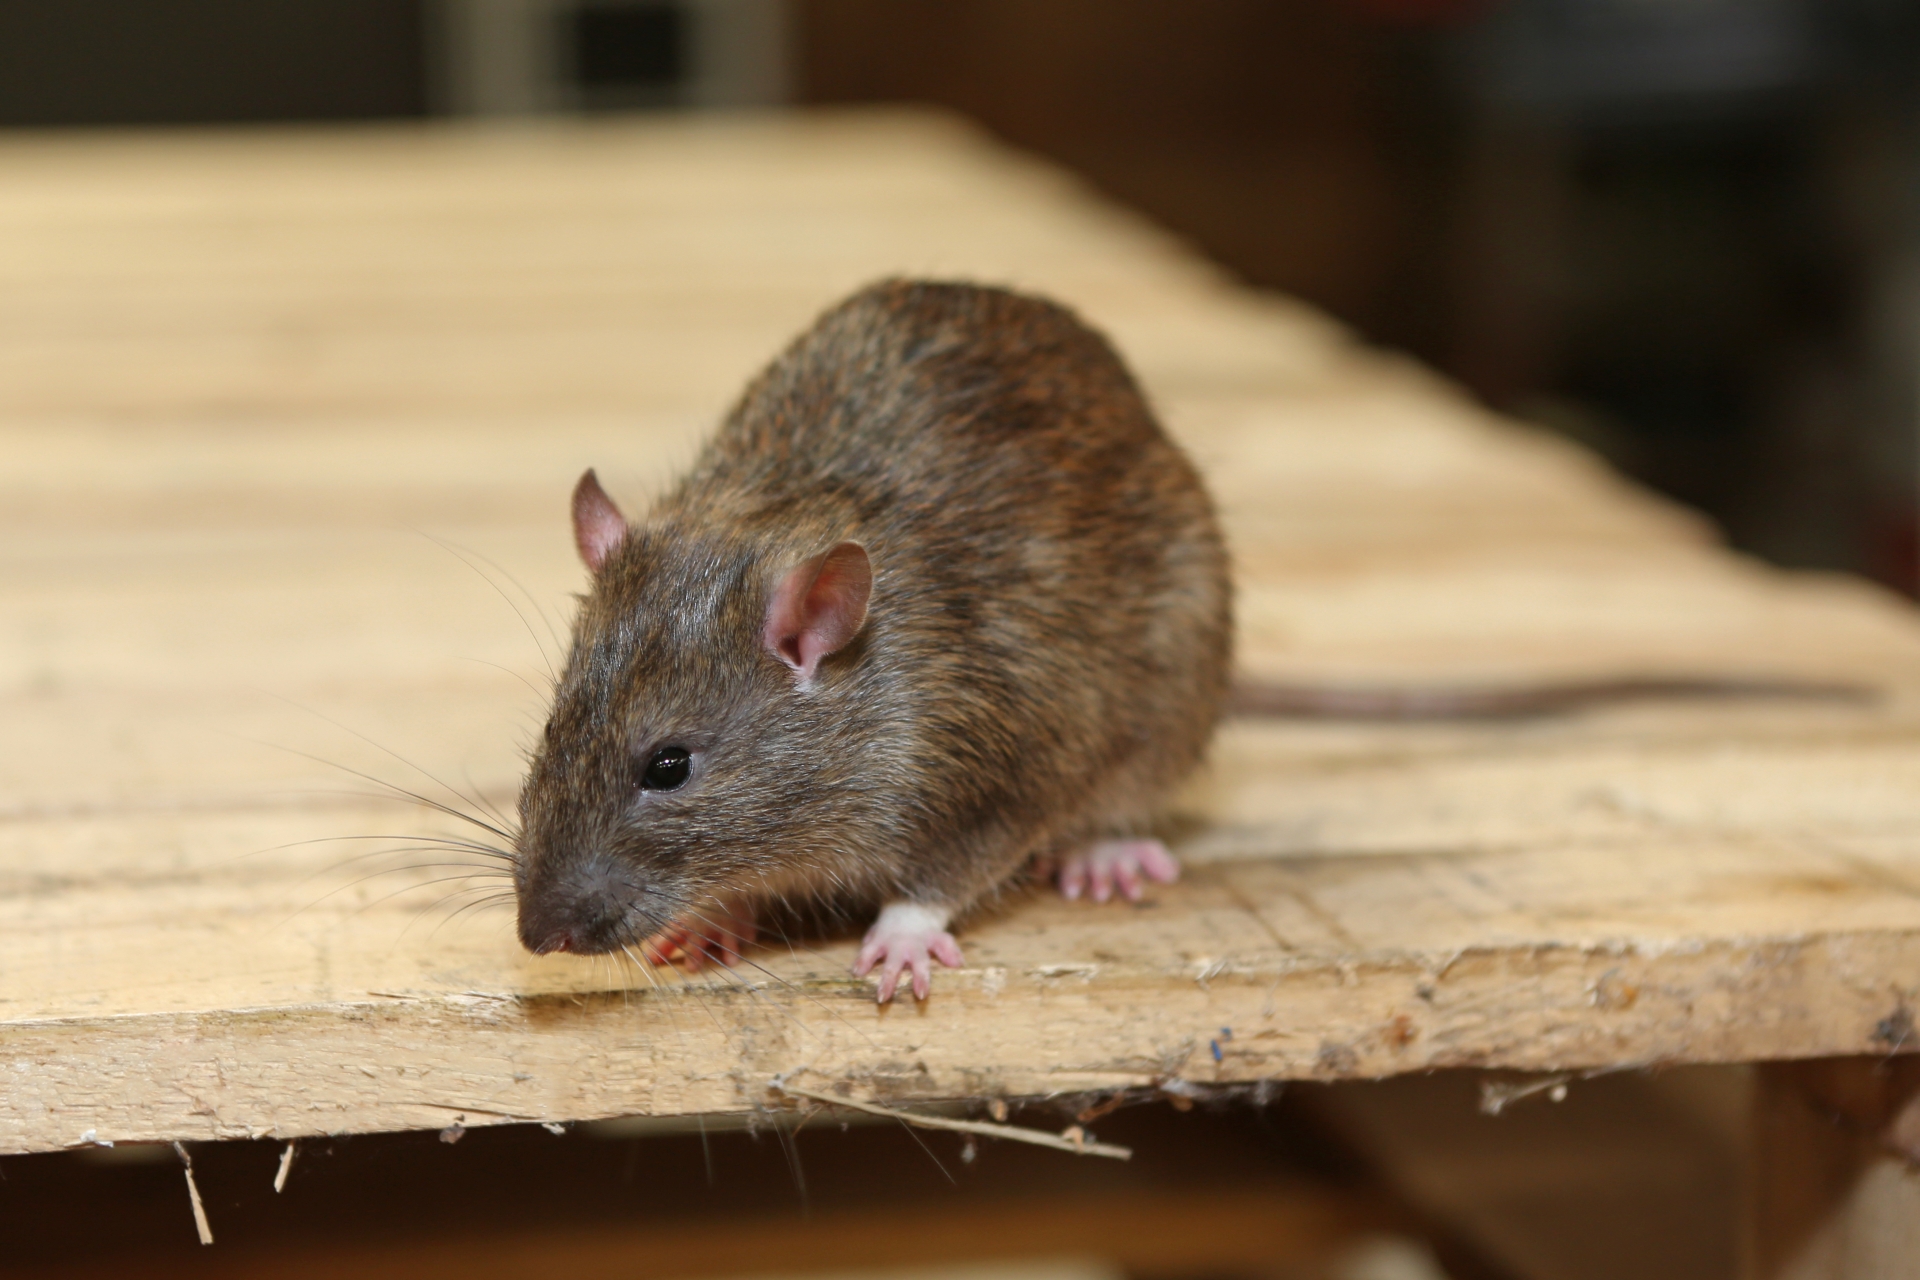 Rat extermination, Pest Control in Caterham, Chaldon, Woldingham, CR3. Call Now 020 8166 9746